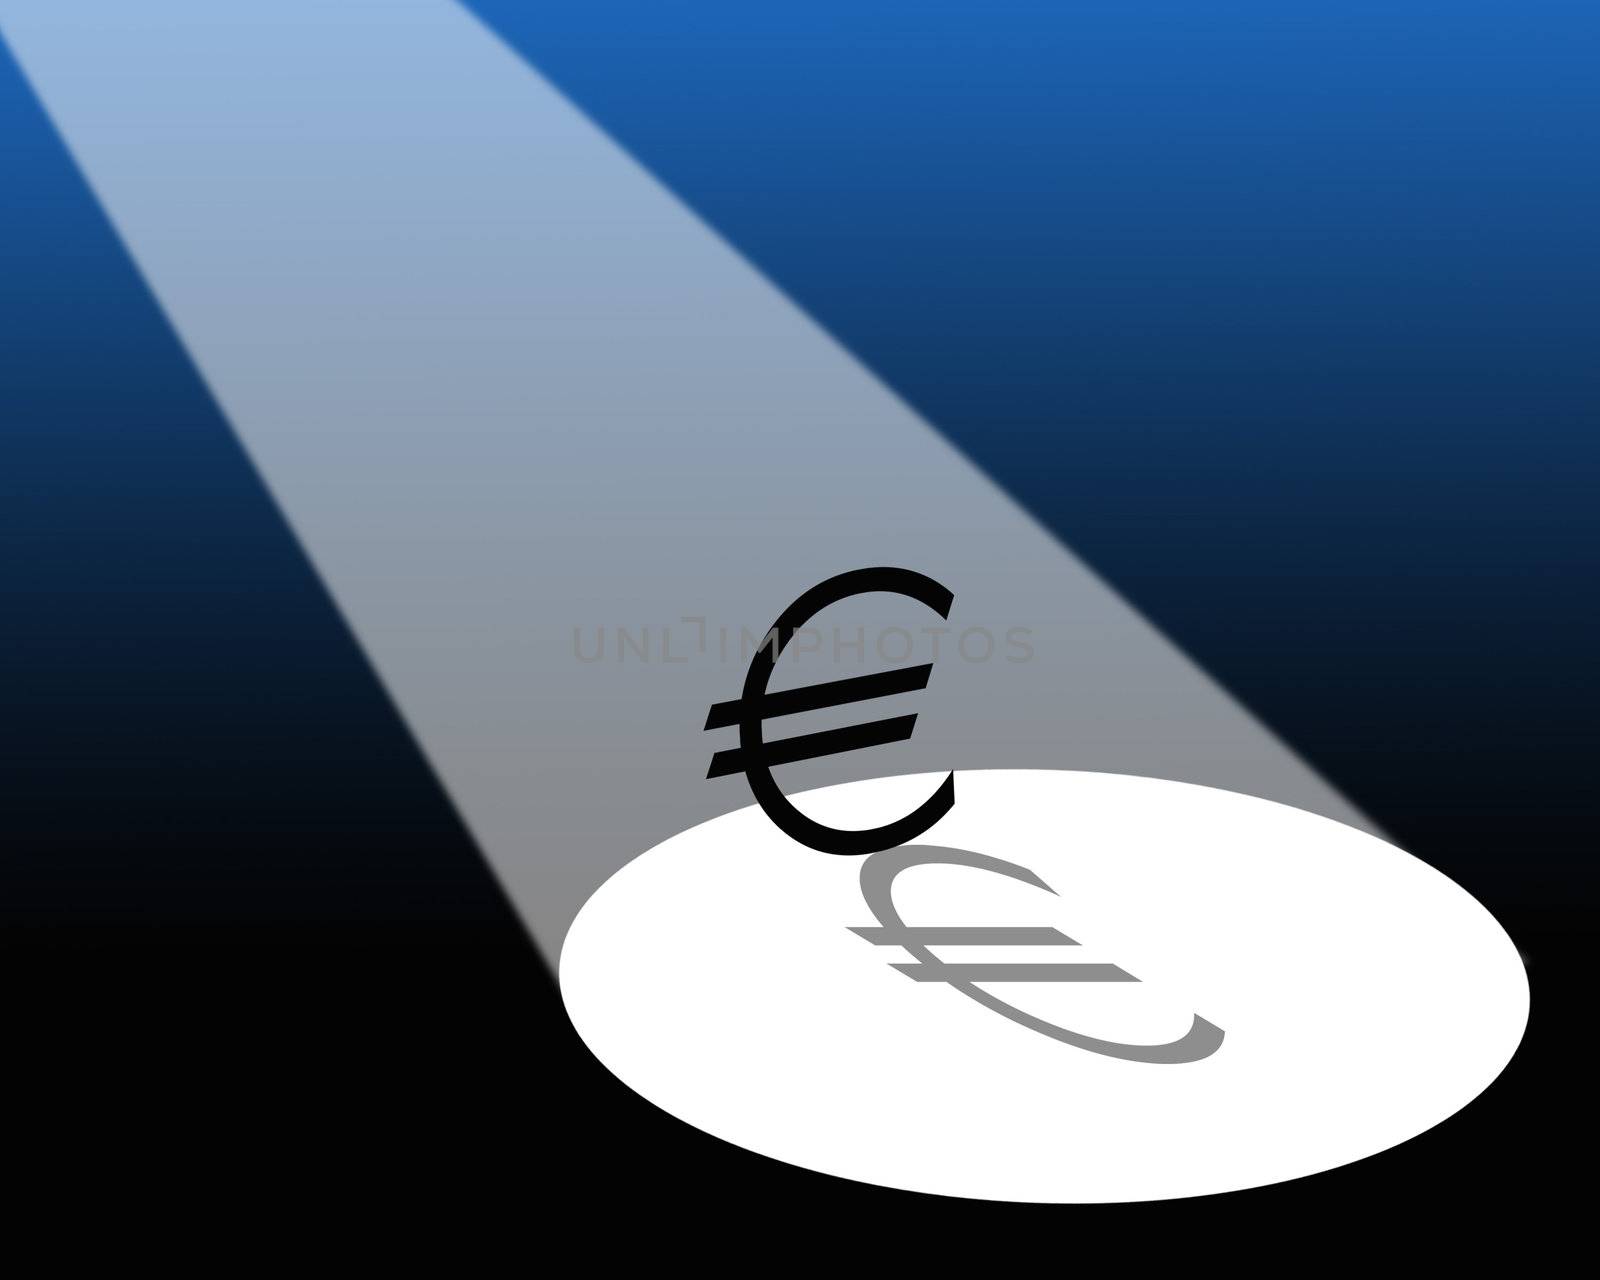 Euro in spotlight by yorkman